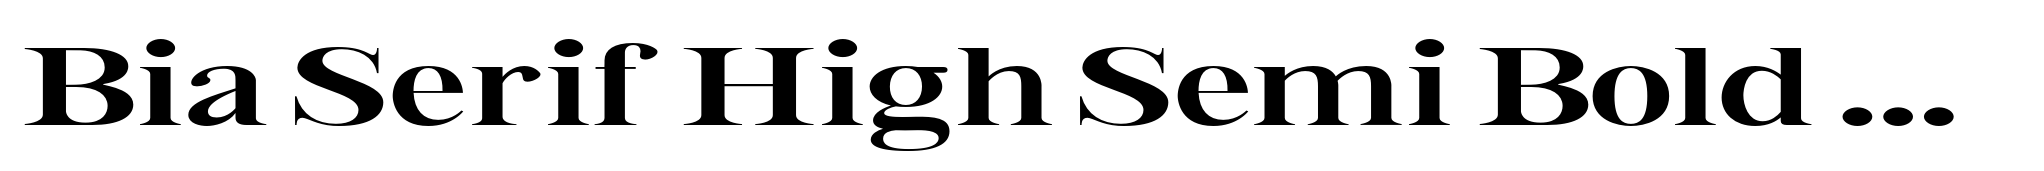 Bia Serif High Semi Bold Expanded image